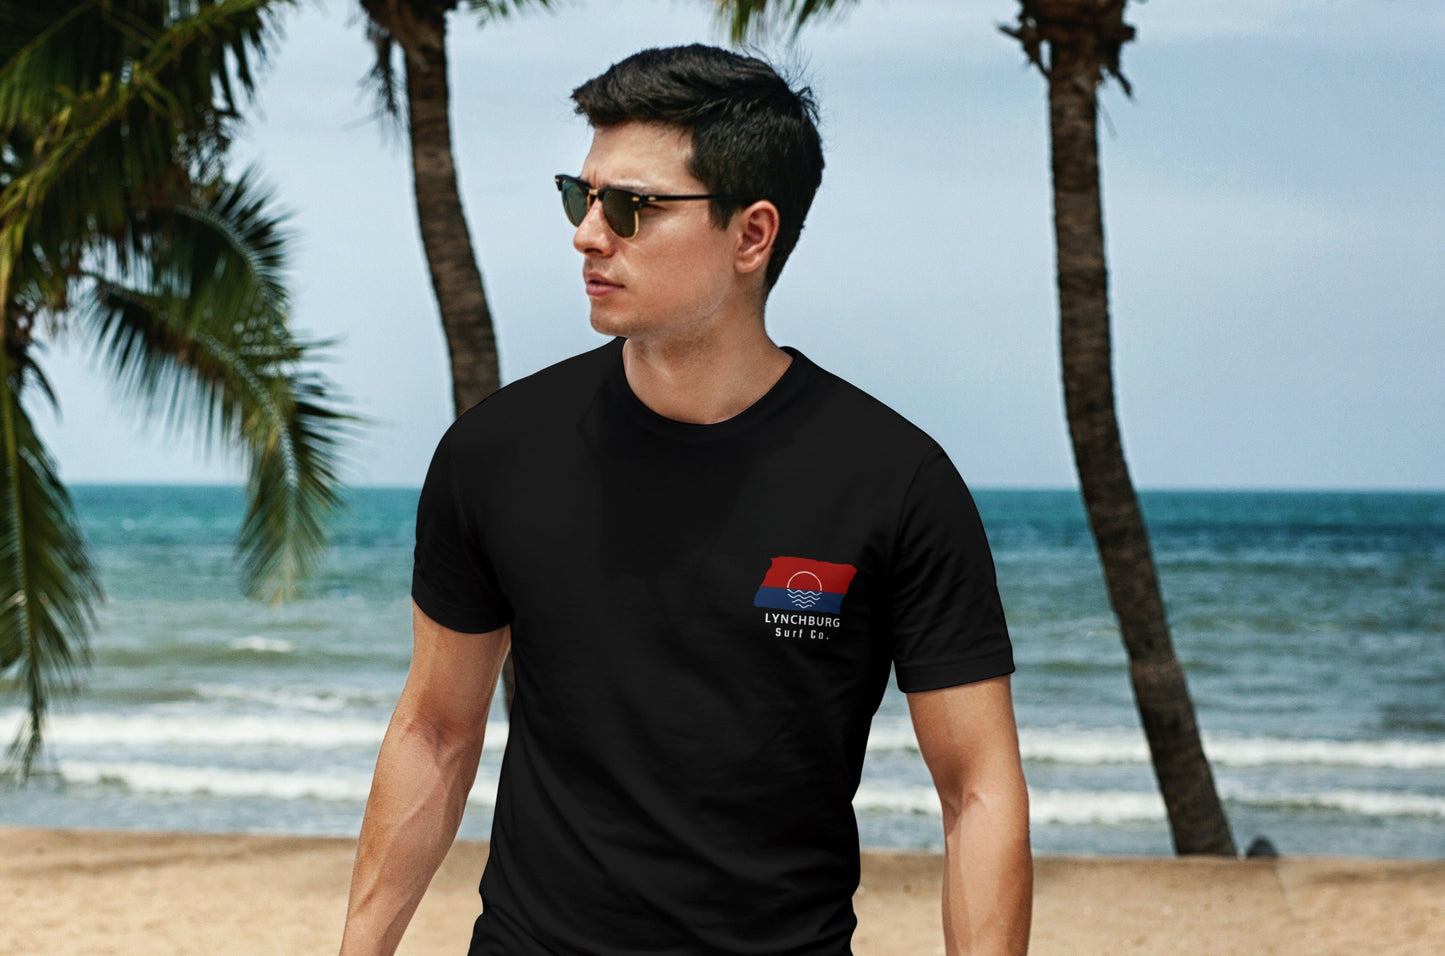 Lynchburg Surf Co. Black Surfboard Shirt